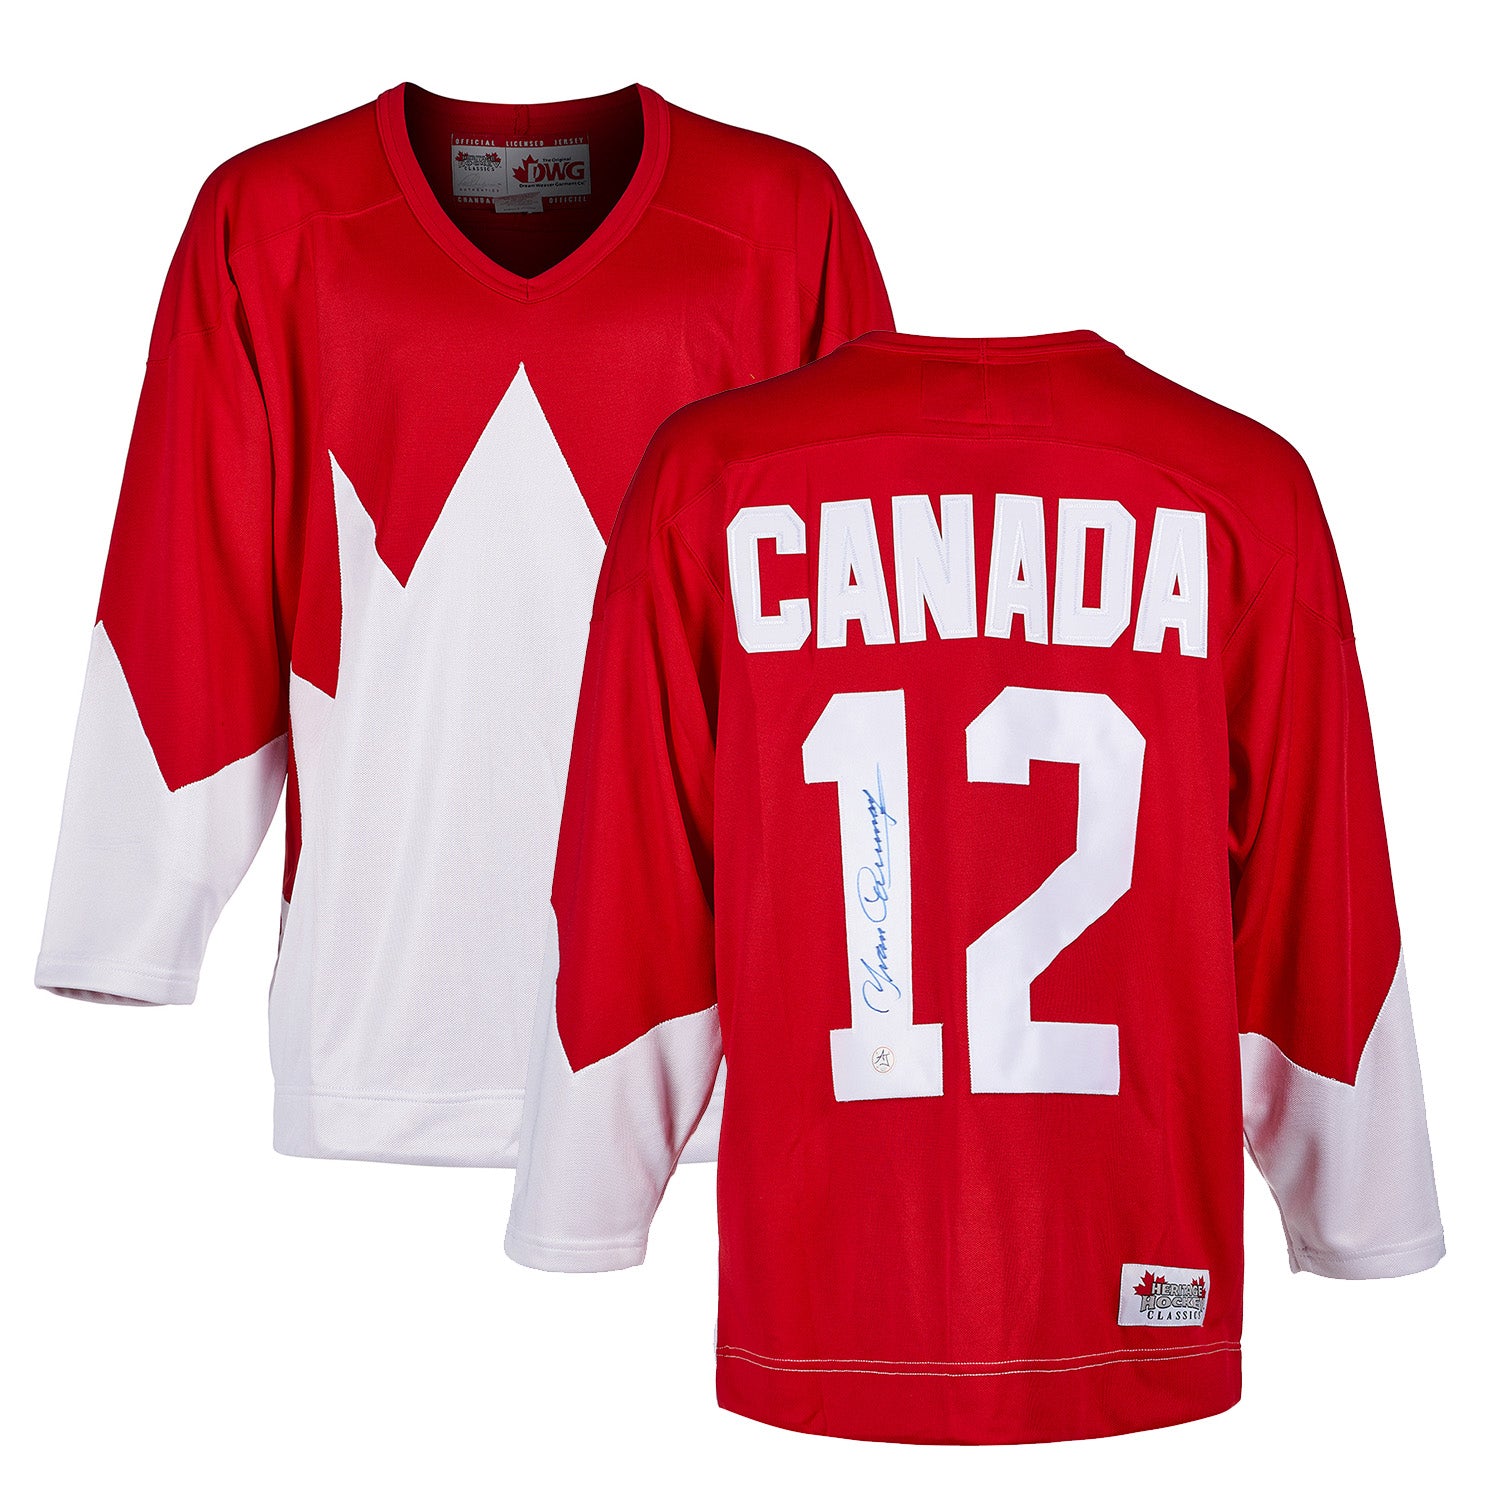 Yvan Cournoyer 1972 Summit Series Signed Team Canada Hockey Jersey